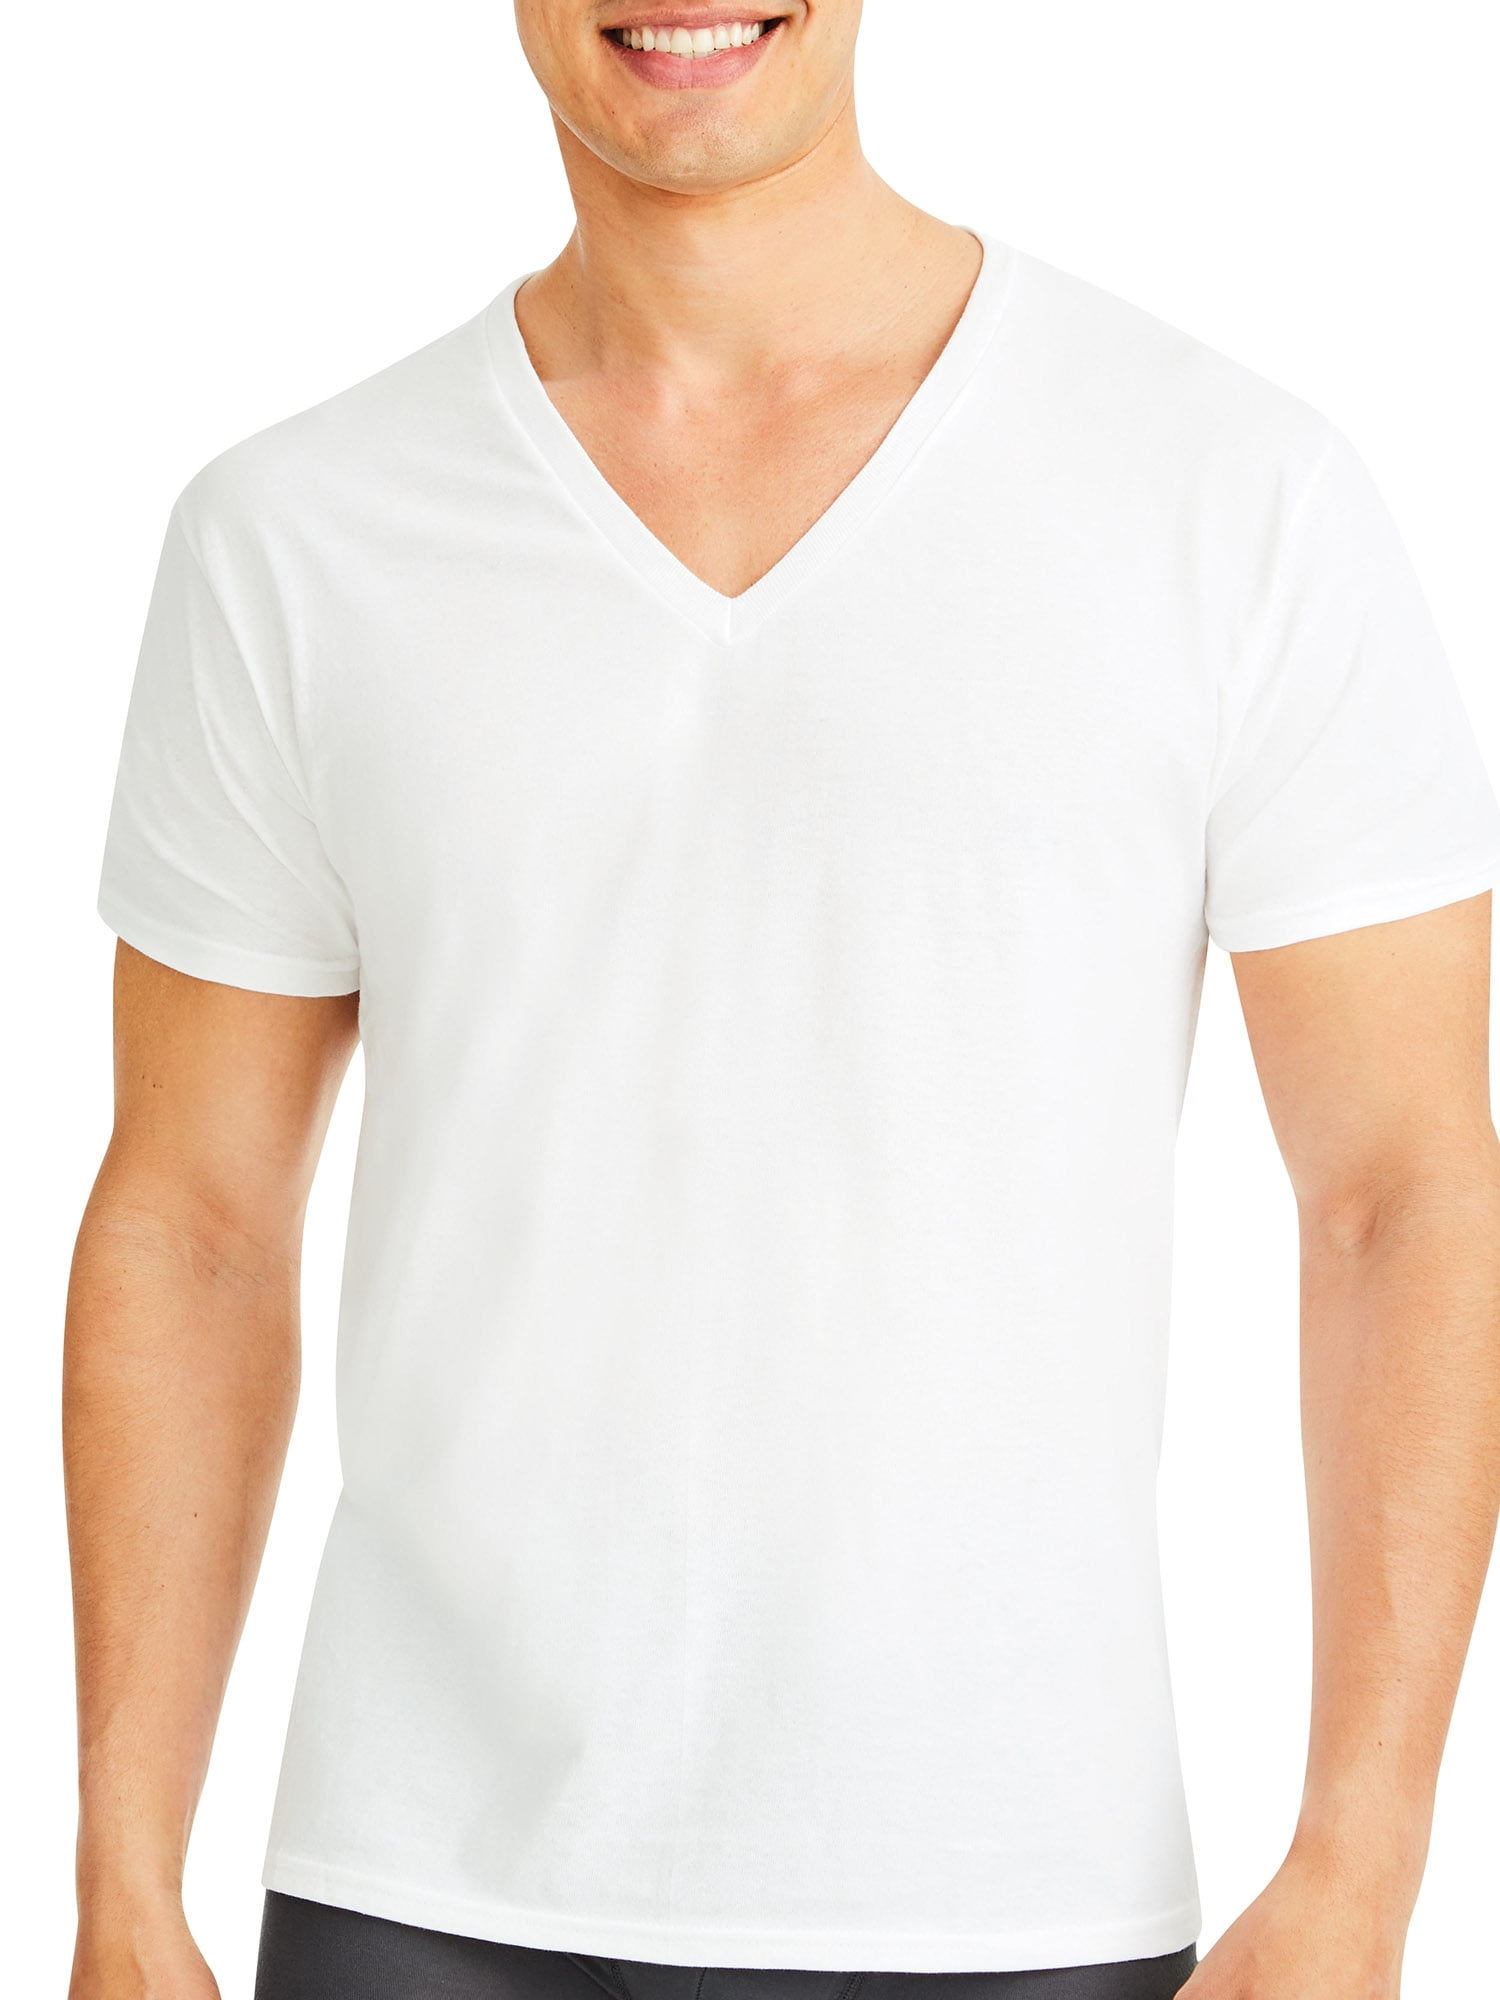 Hanes - Hanes White V Neck ComfortSoft T-Shirts, 10 Pack - Walmart.com